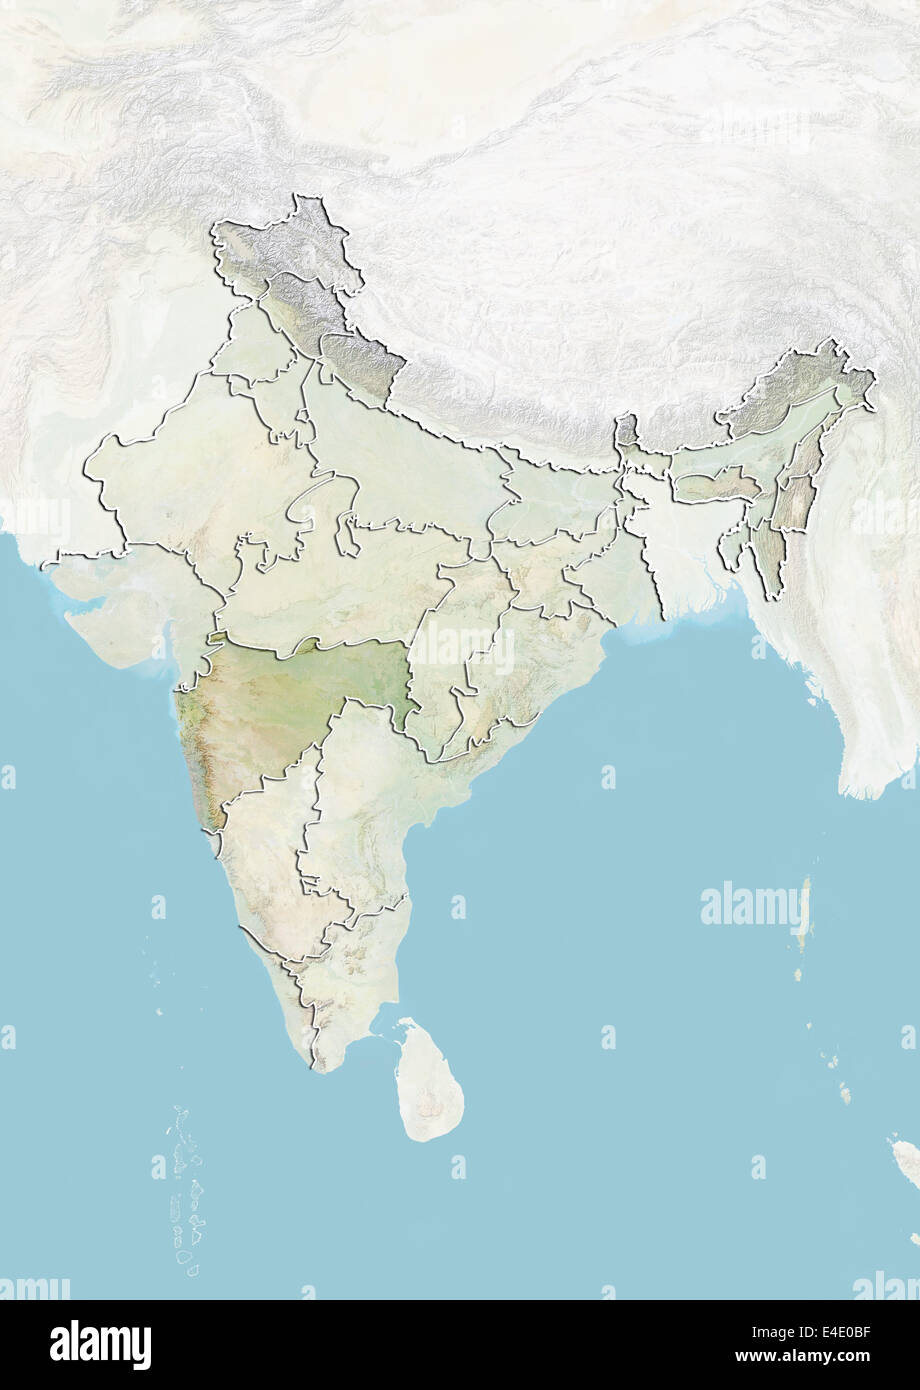 L'Inde et l'État de Maharashtra, carte en relief Banque D'Images